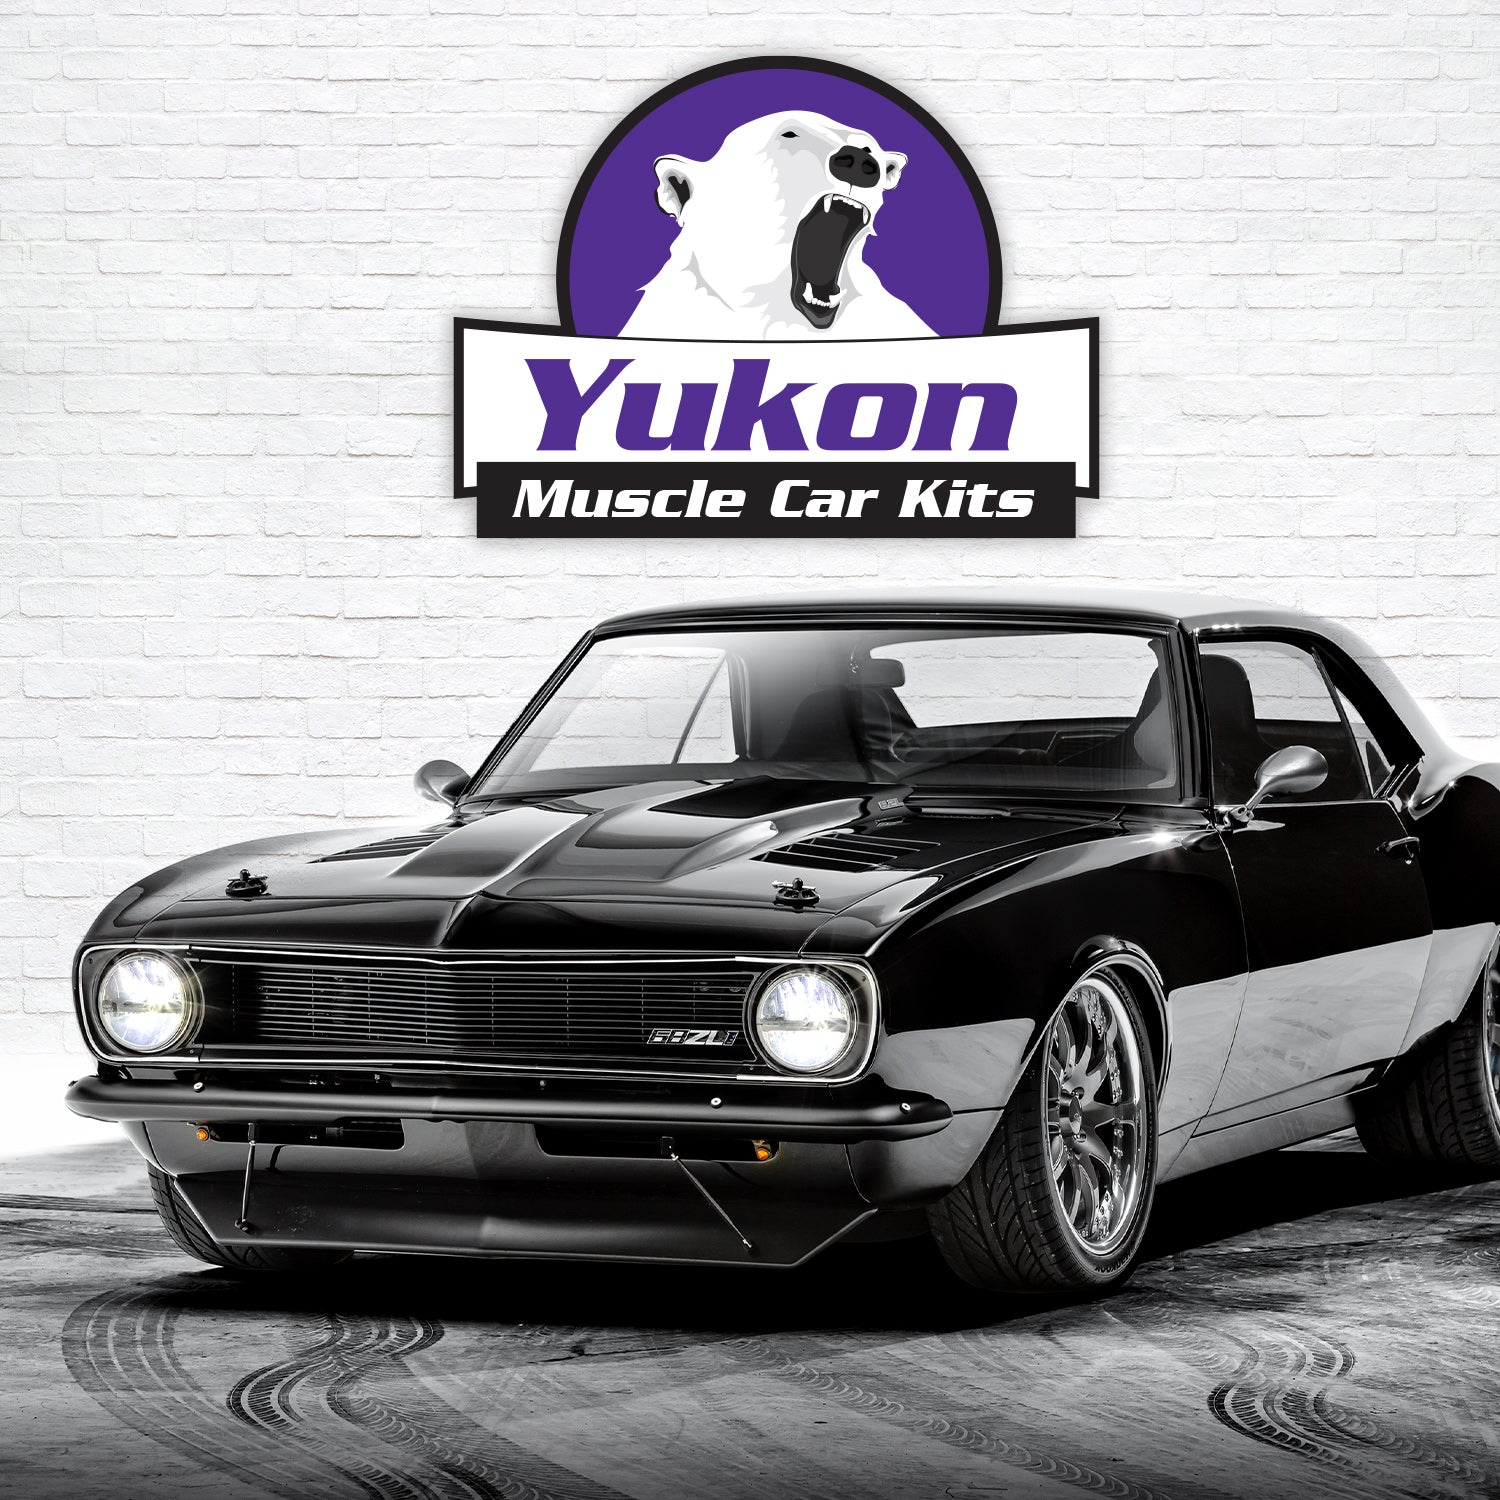 Yukon Gear Oldsmobile Pontiac (RWD) Differential Ring and Pinion Kit - Rear YGK2354